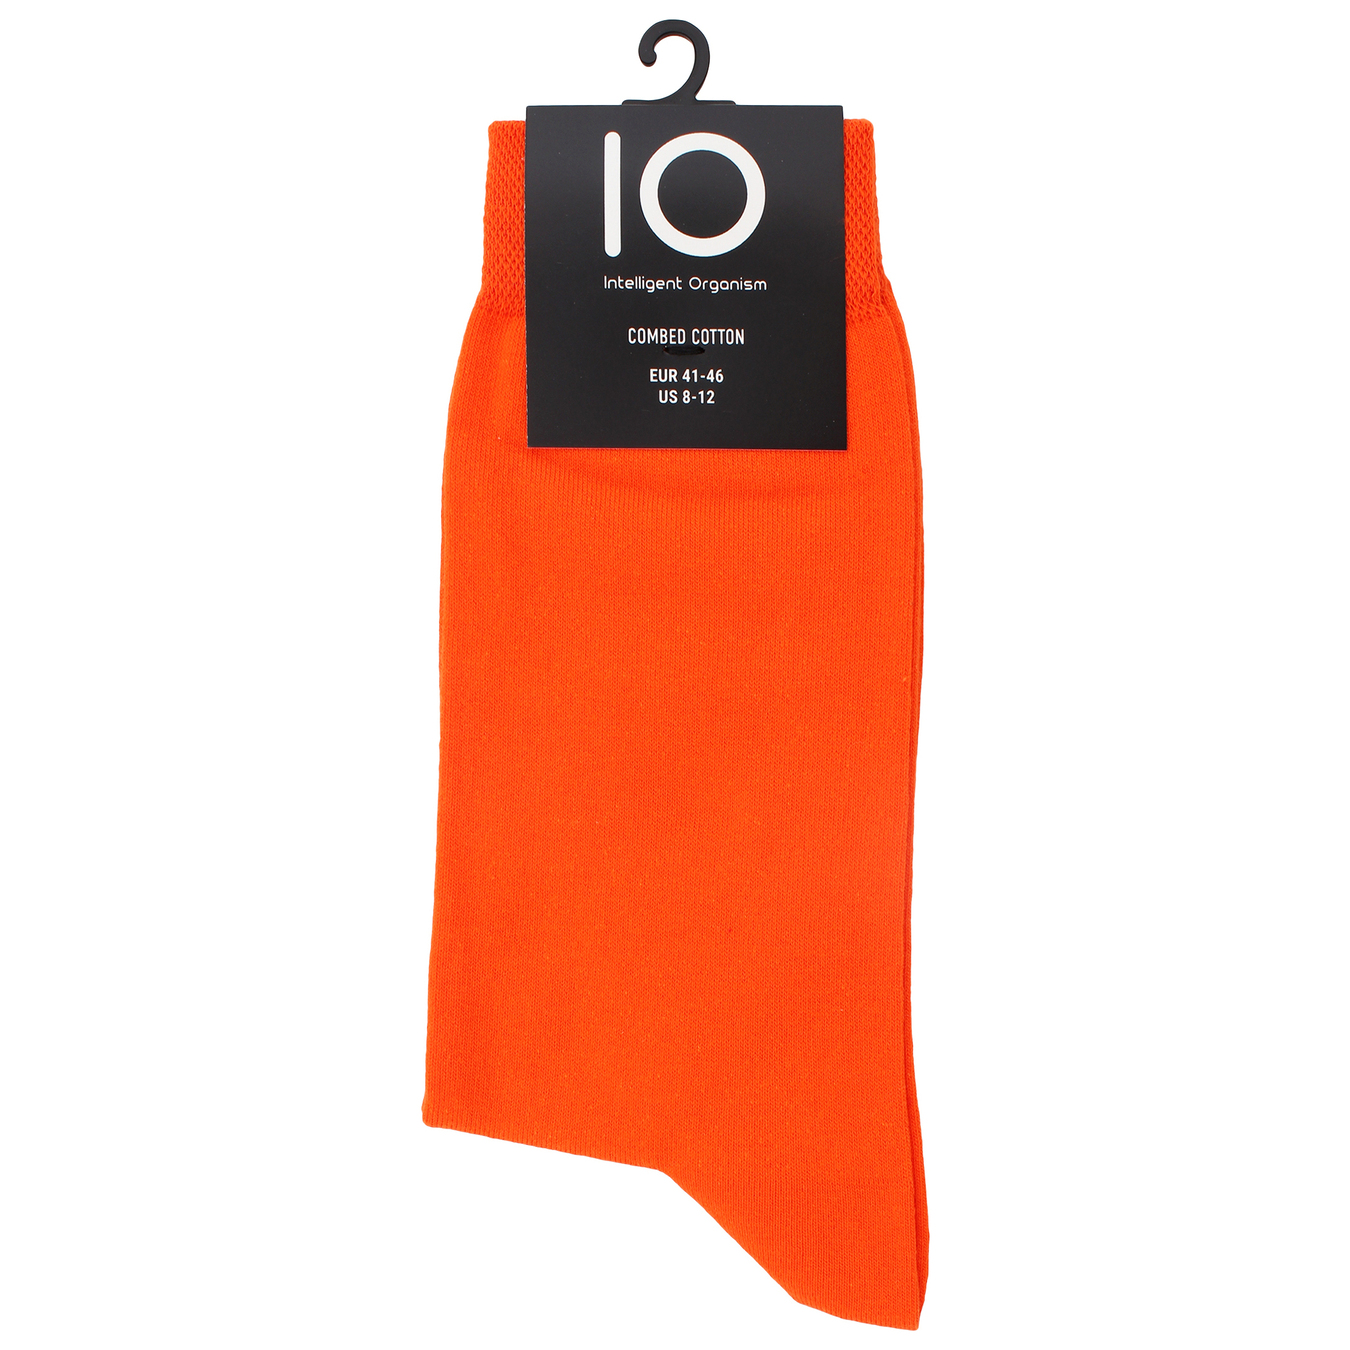 IO socks for men, orange, 41-46 years old.